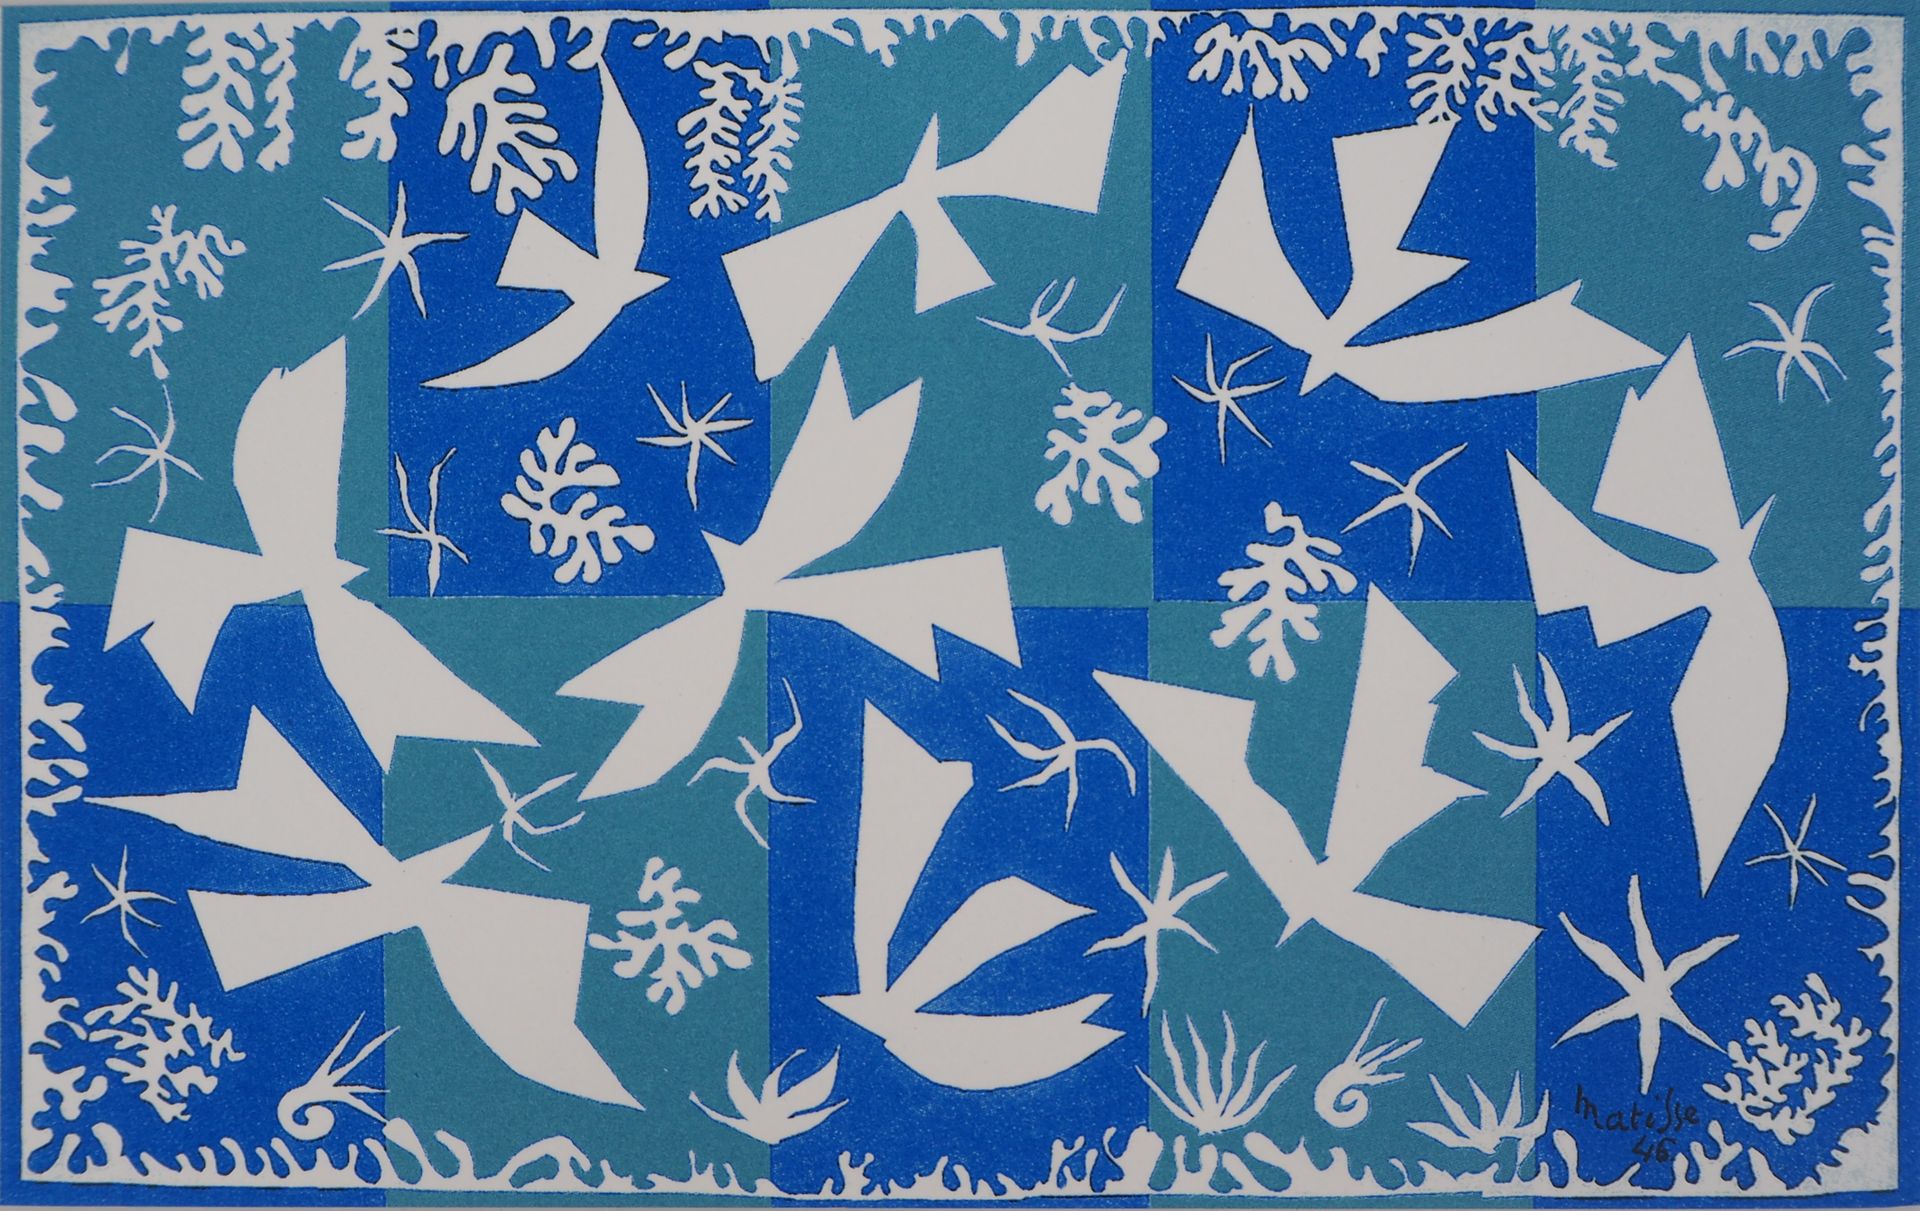 Henri MATISSE Henri Matisse (1869-1954) (after)

Polynesia, Dove in the Sky

Scr&hellip;